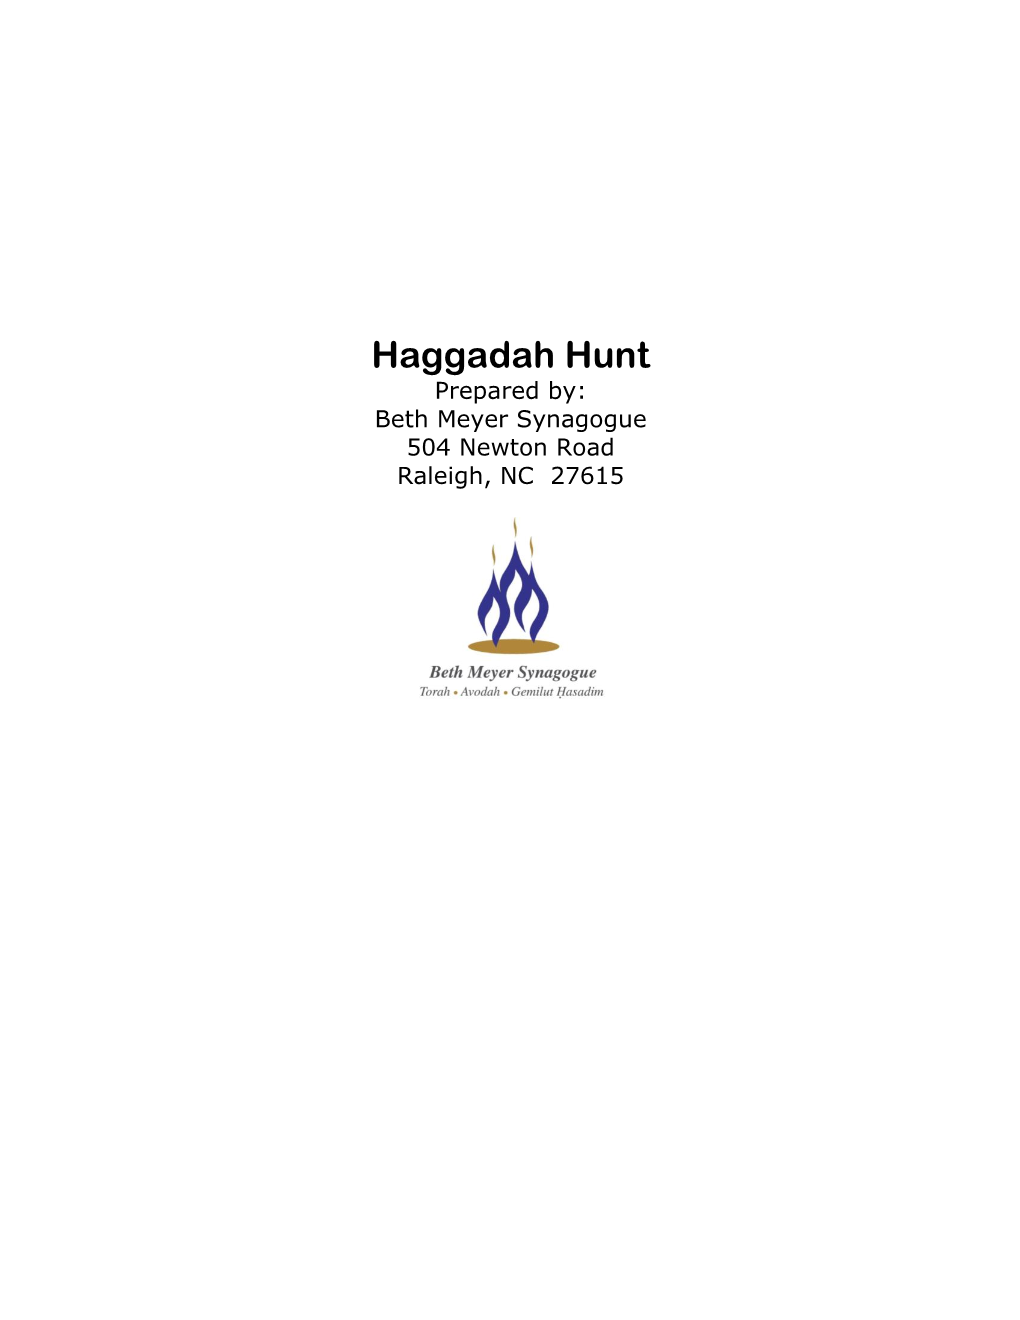 Haggadah Hunt Prepared By: Beth Meyer Synagogue 504 Newton Road Raleigh, NC 27615